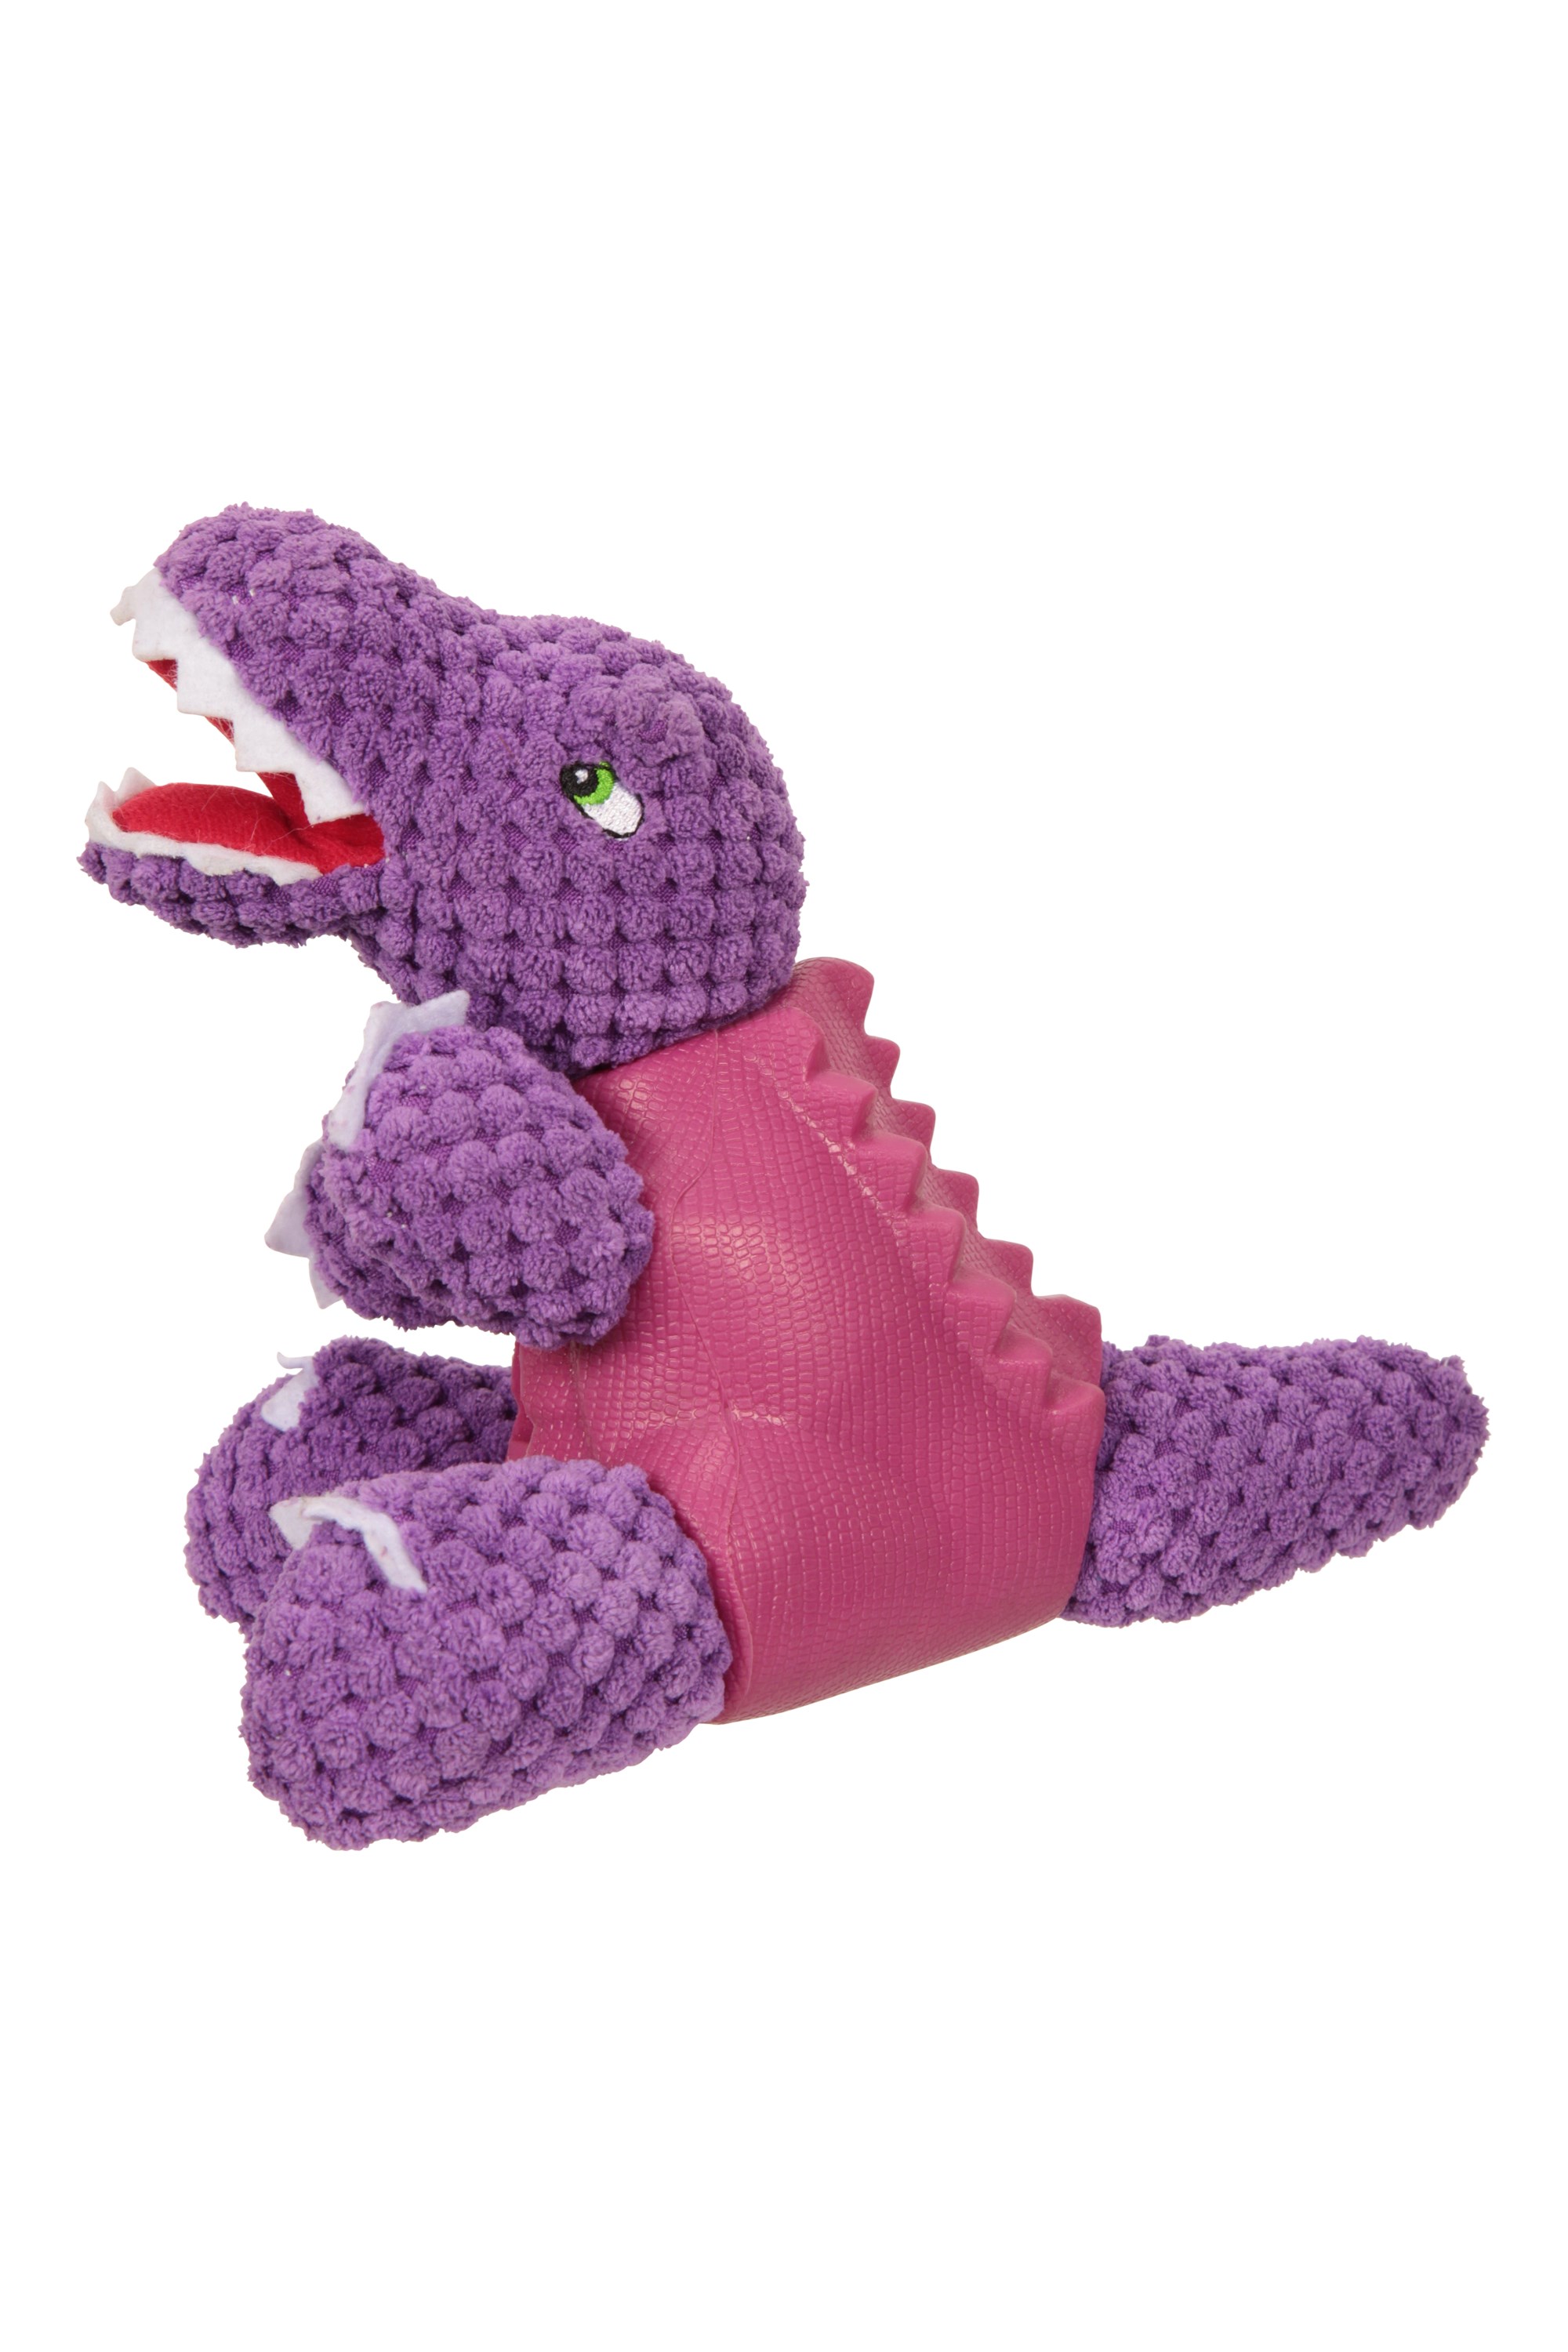 Squeaky Toy Dinosaur - Purple